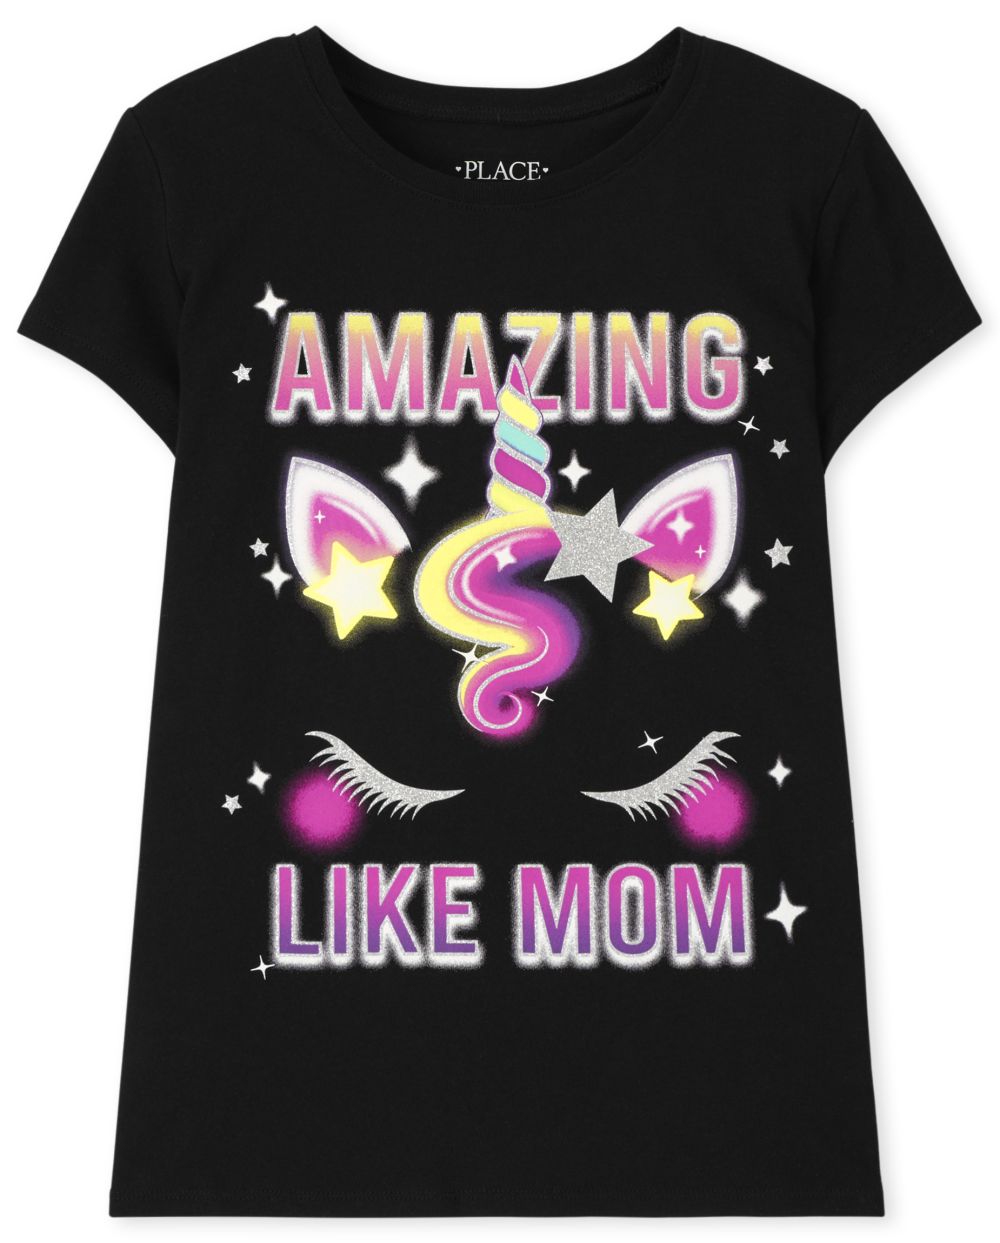 Mom Graphic Tee - Black T-Shirt